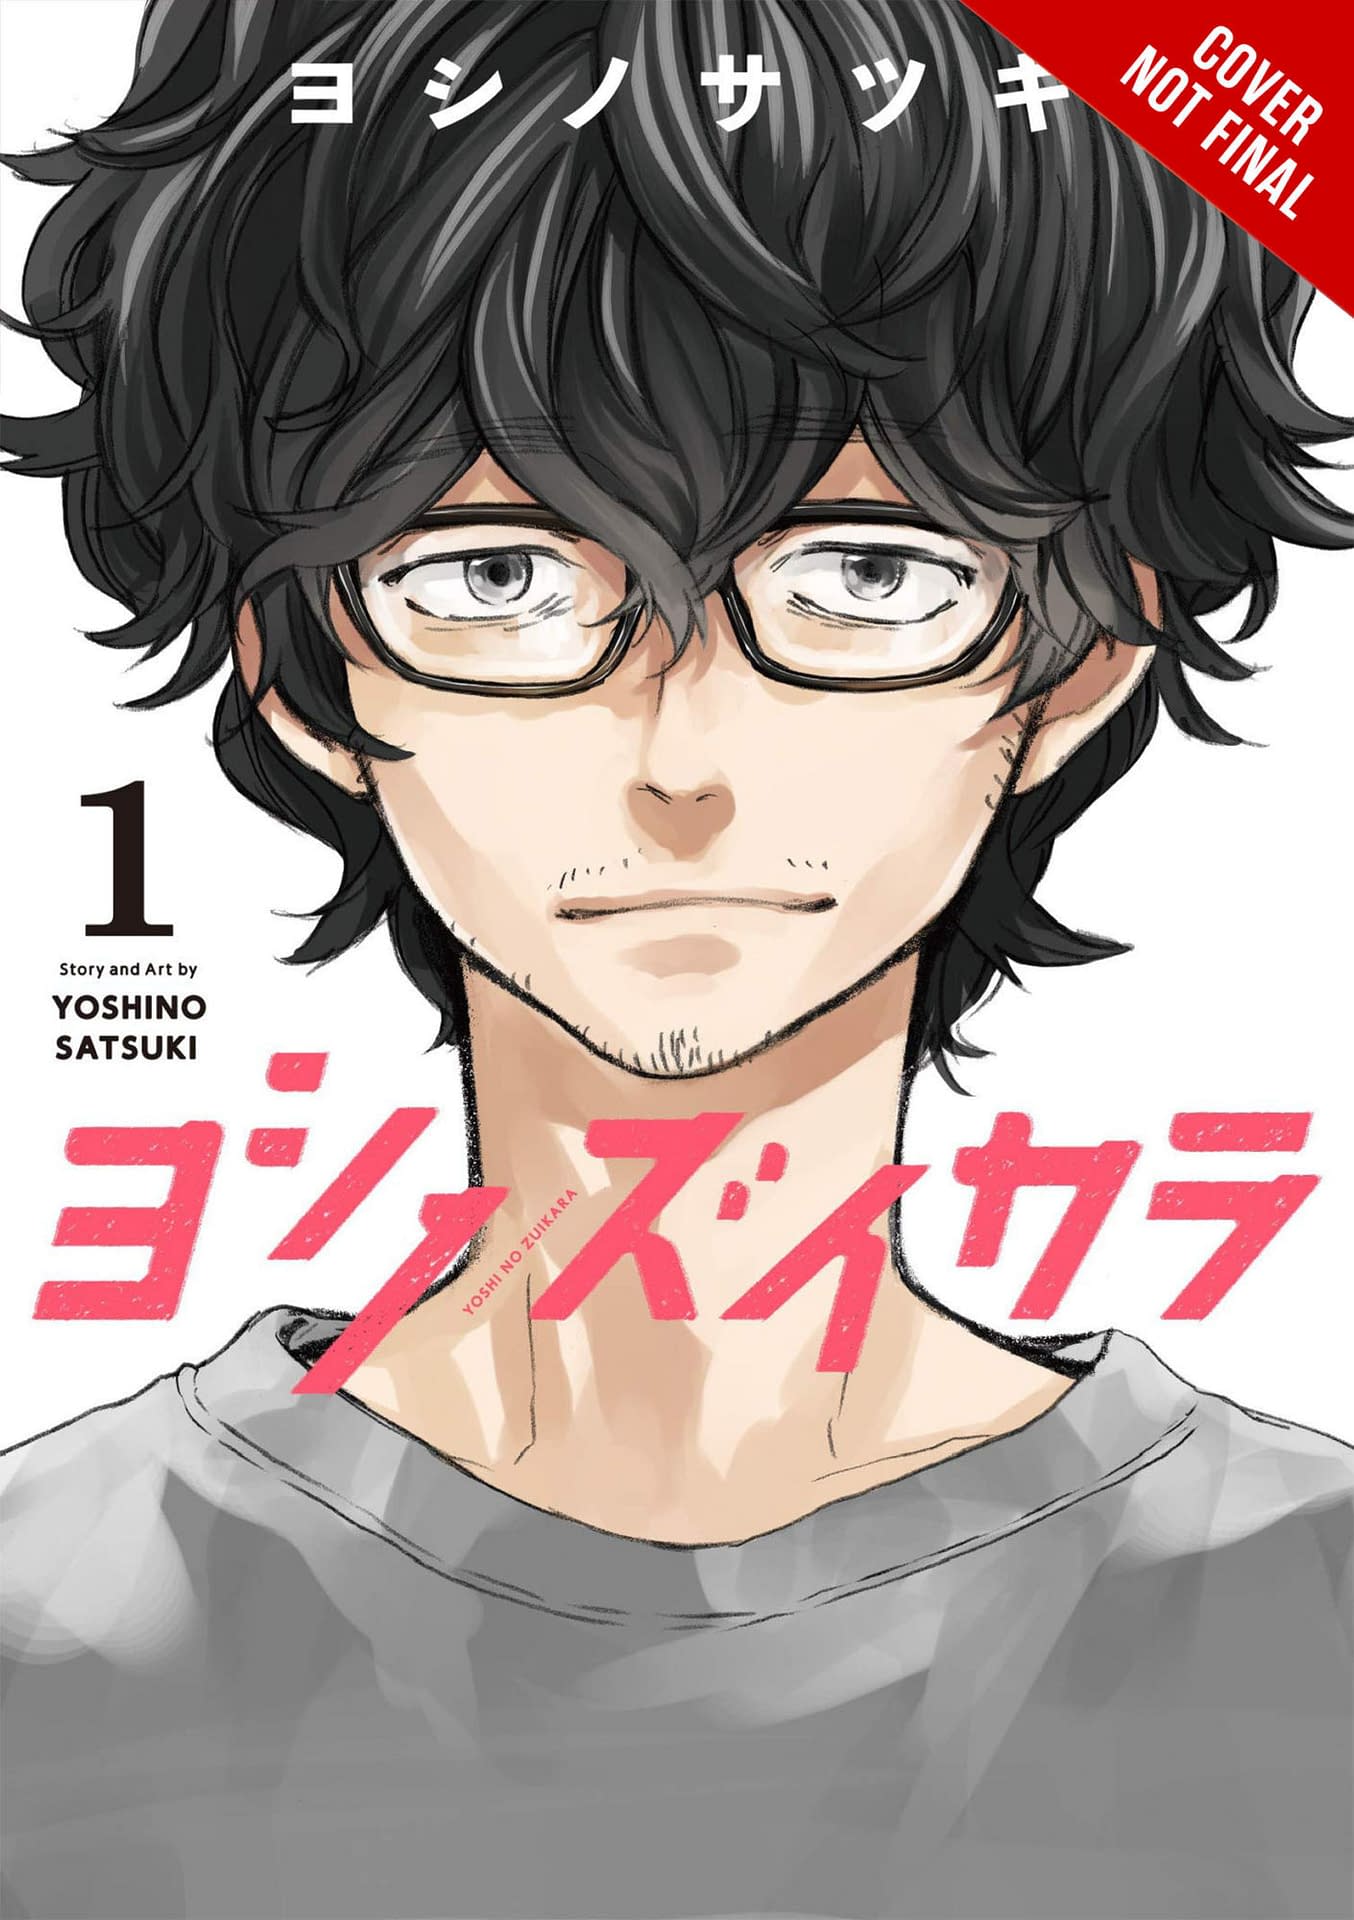 Yen Press Announces New Manga and Light Novel Titles for August 2020